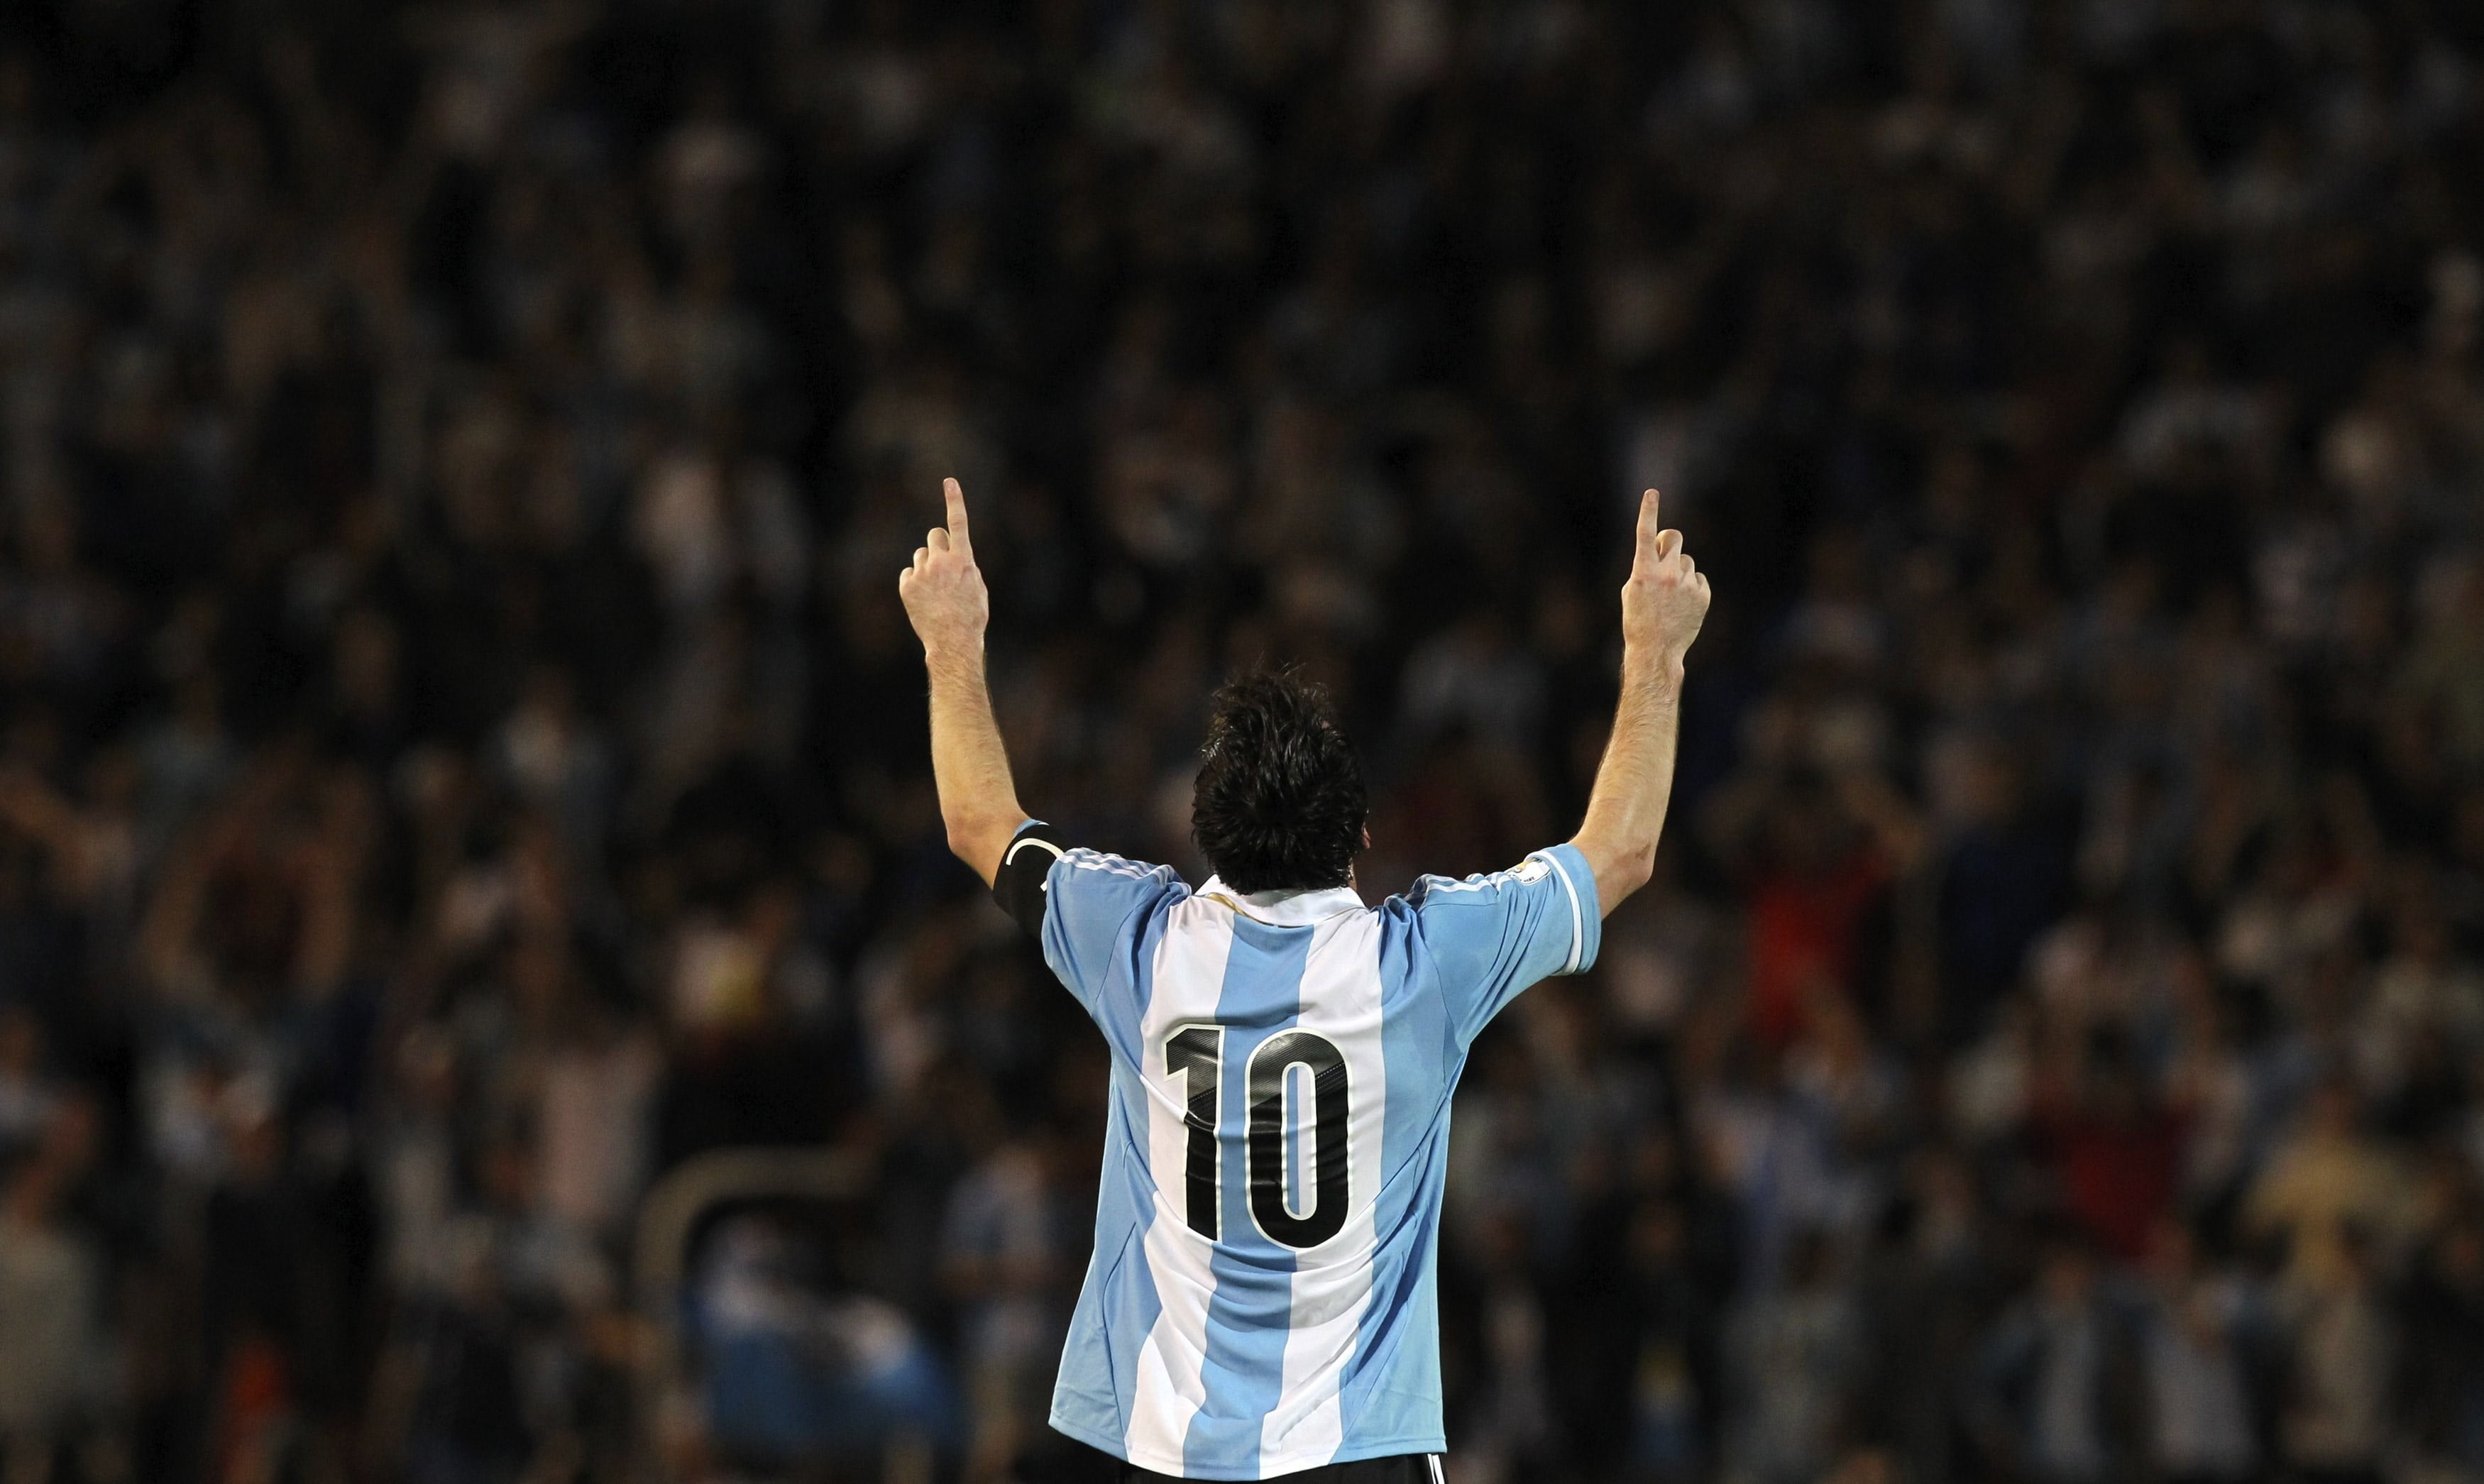 Lionel Mesi raising arms, Lionel Messi, Argentina, soccer, human arm